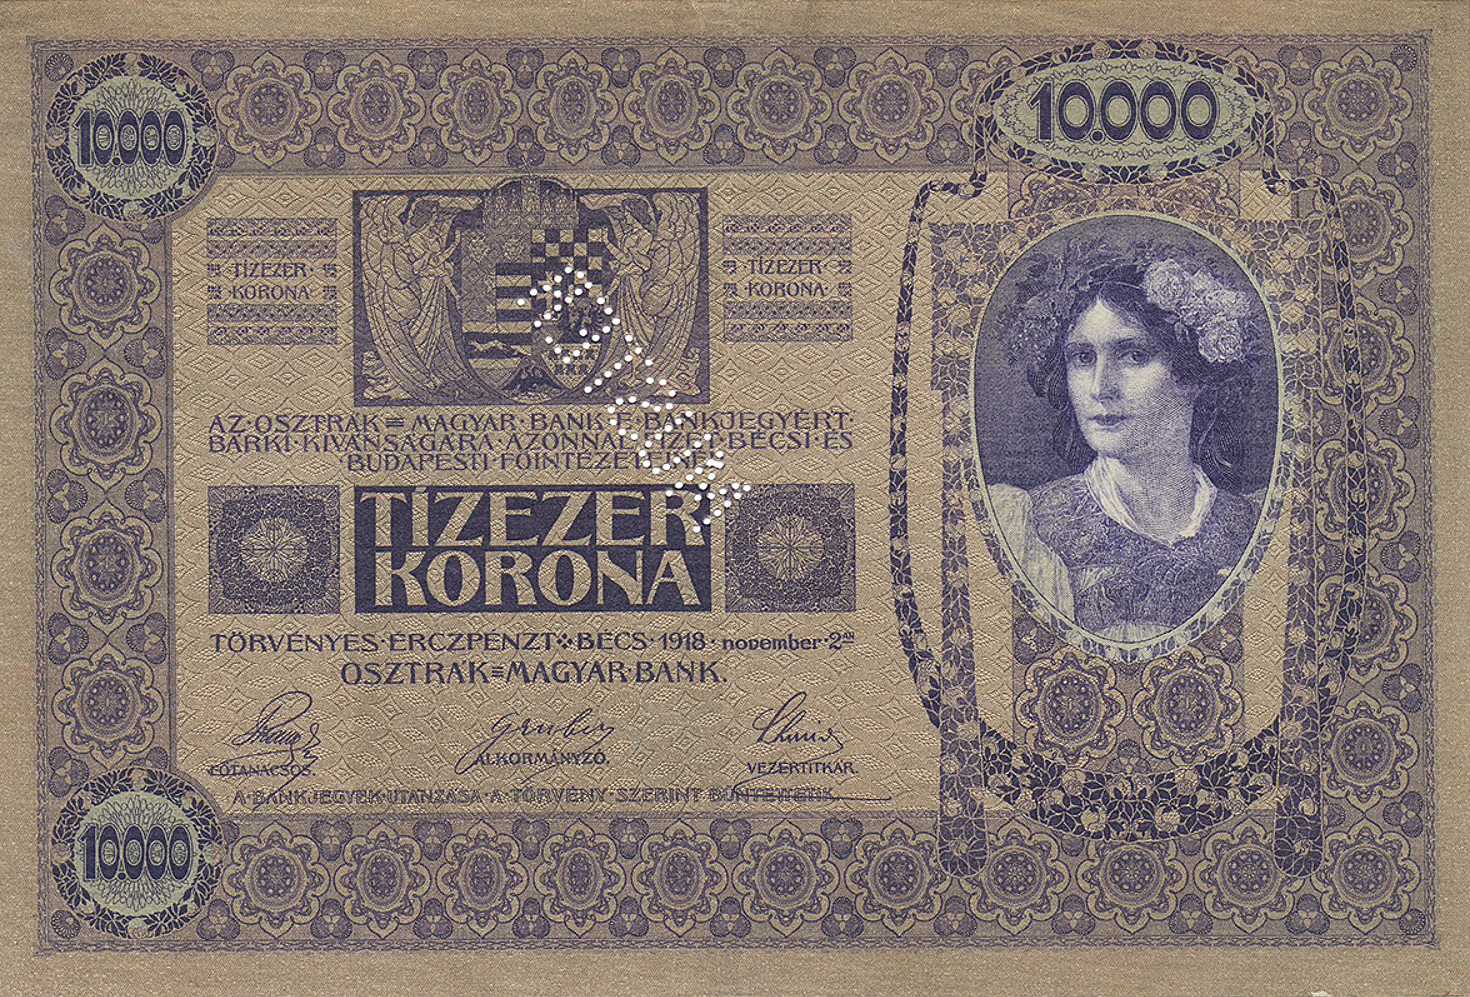 Образец 10000 крон 1920 года (реверс)